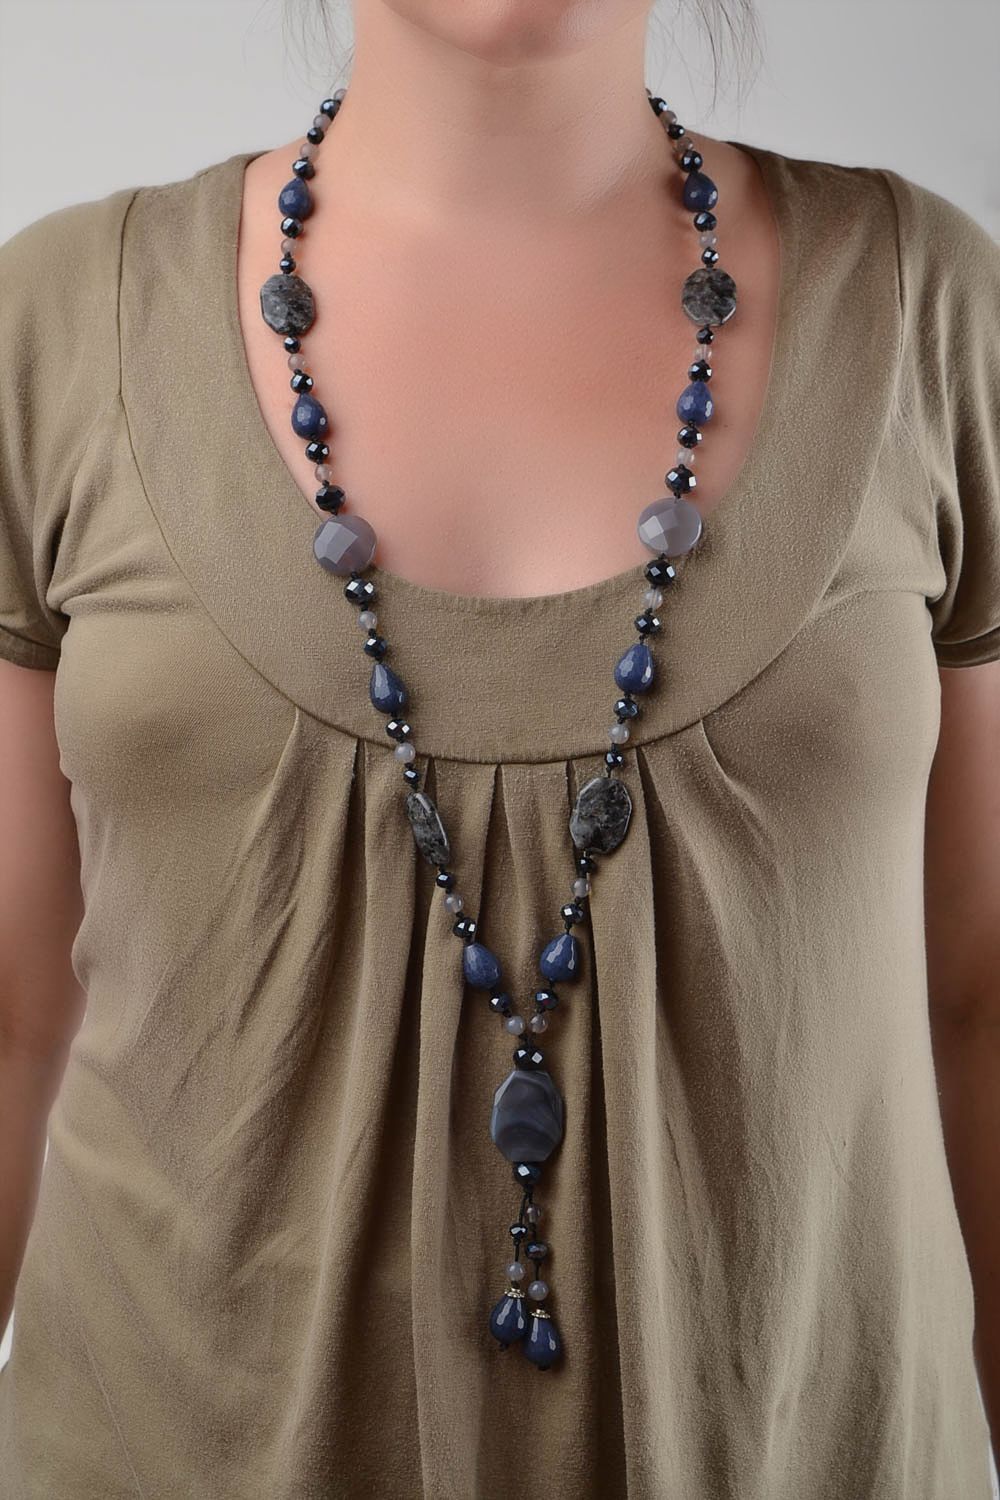 Handmade dark long natural stone designer necklace with pendant stylish photo 1